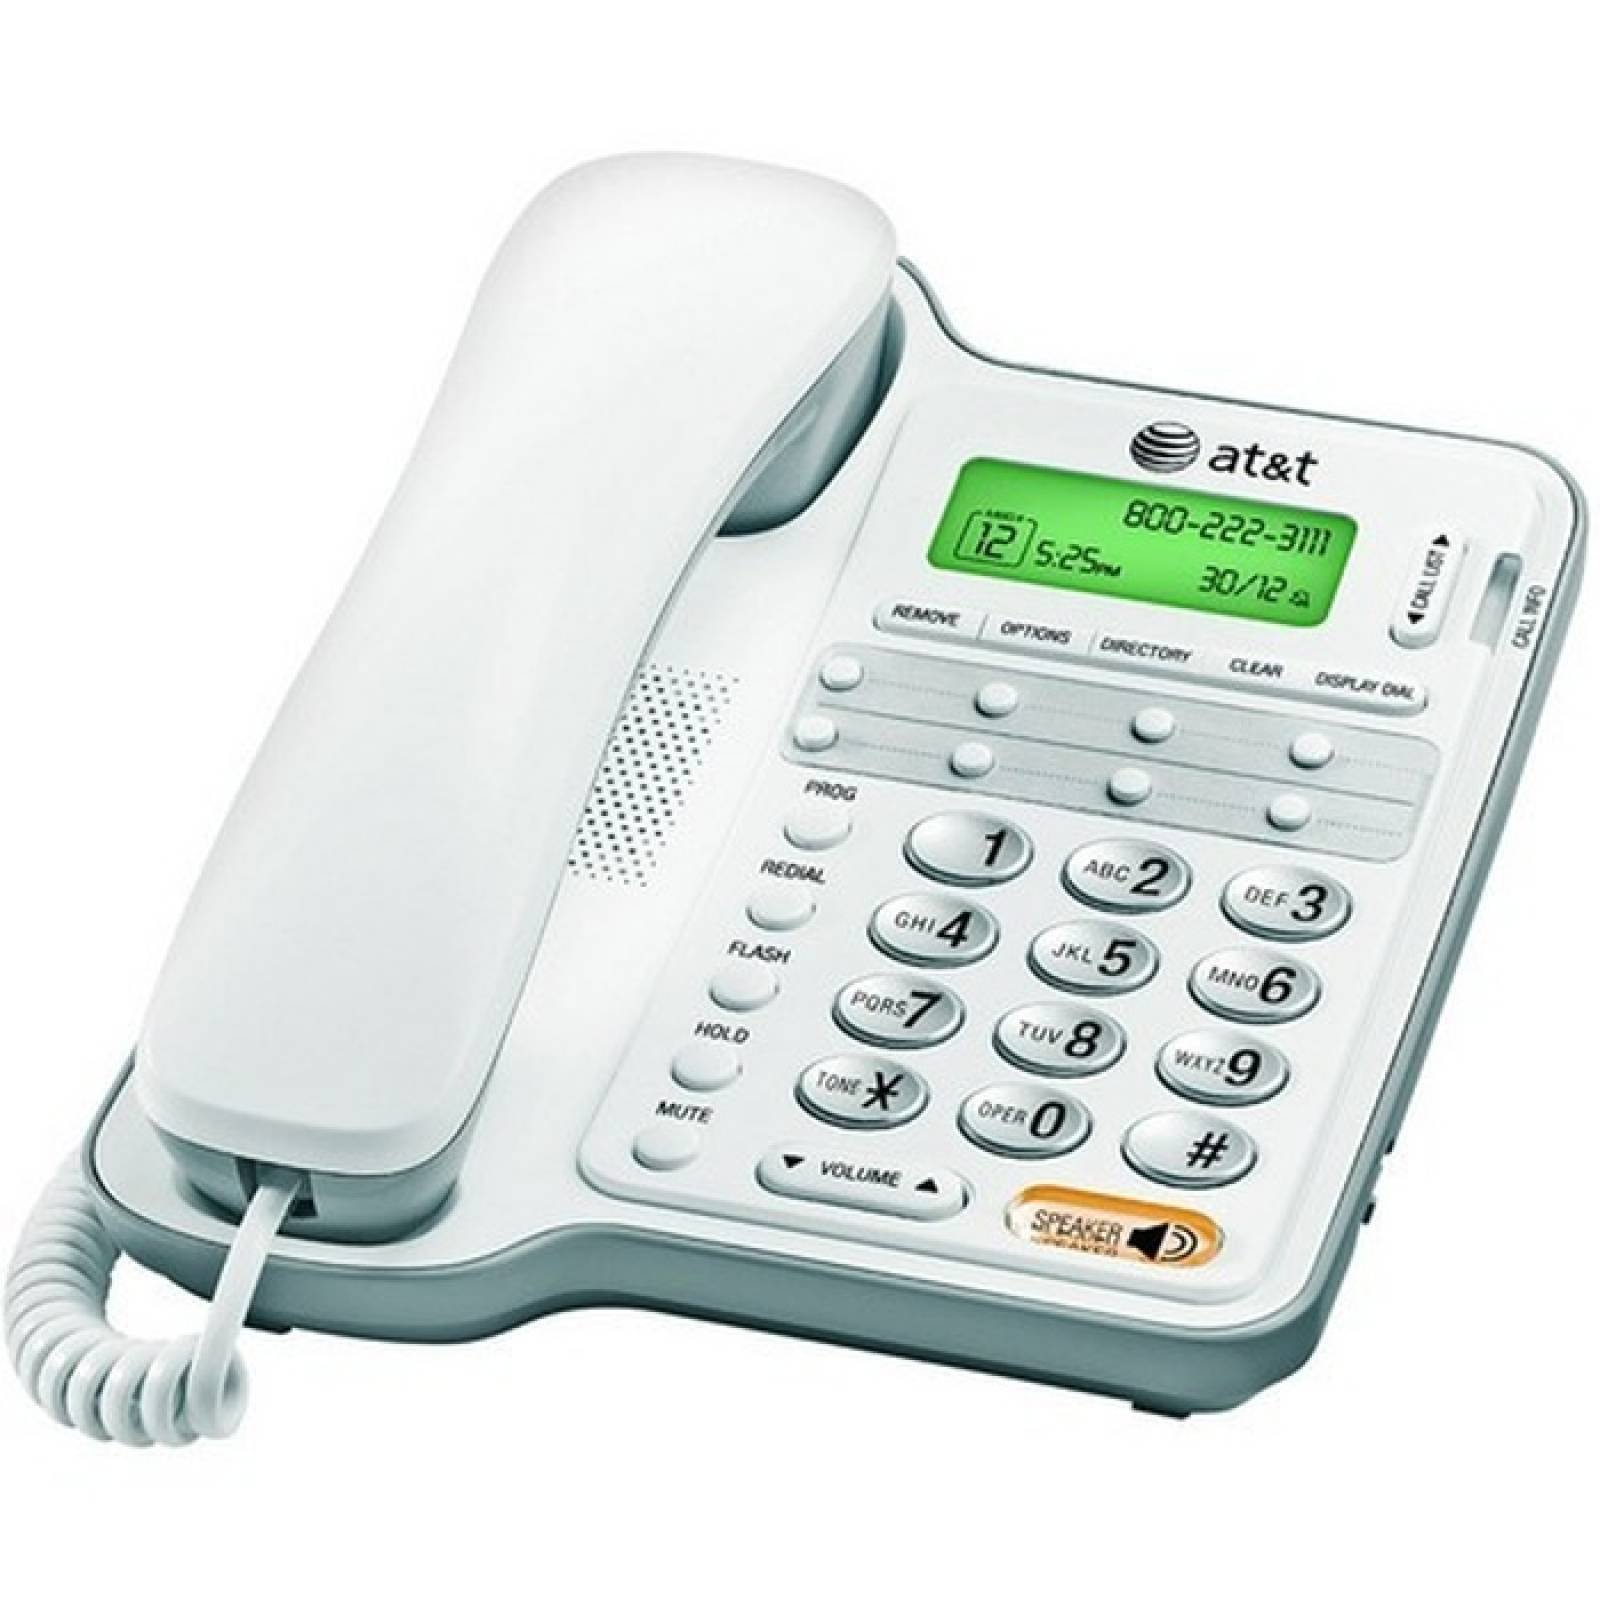 ATampT 2909 Basic Phone